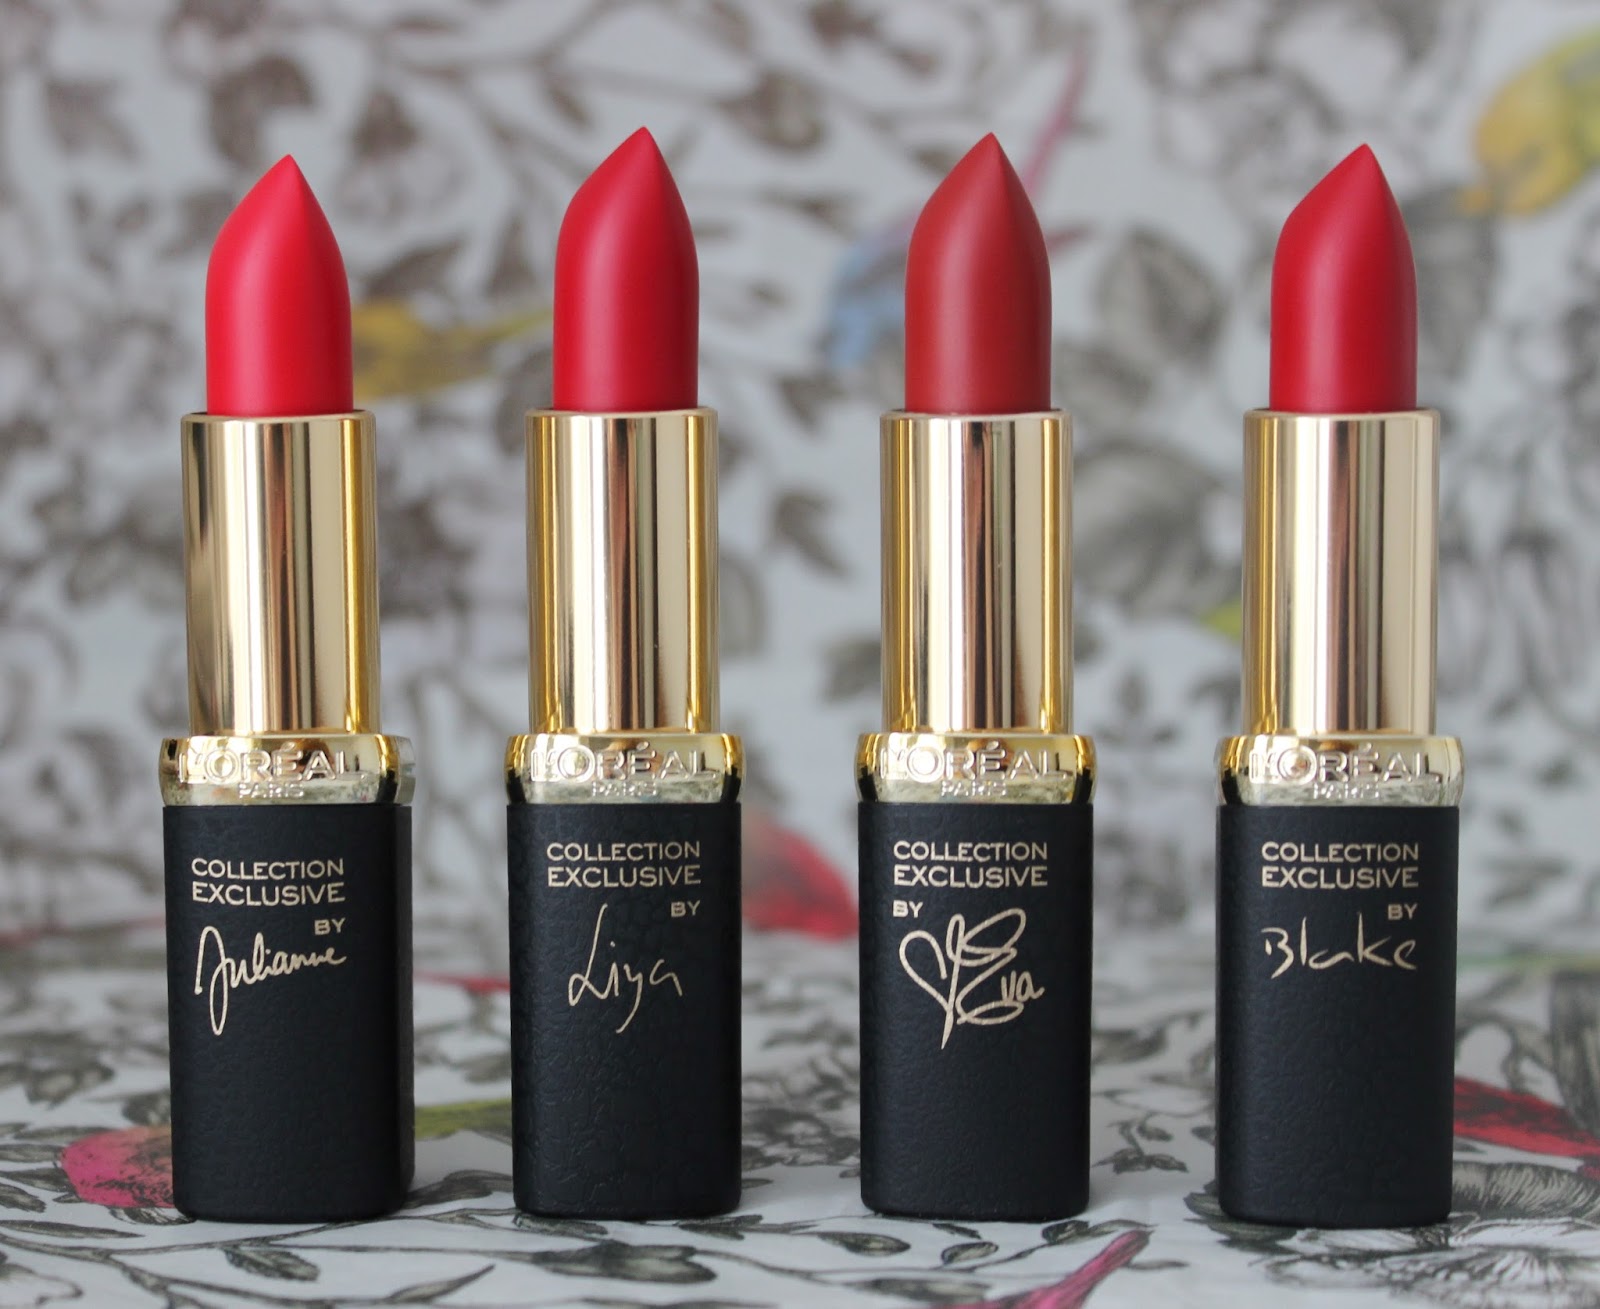 L'Oreal pure reds lipsticks